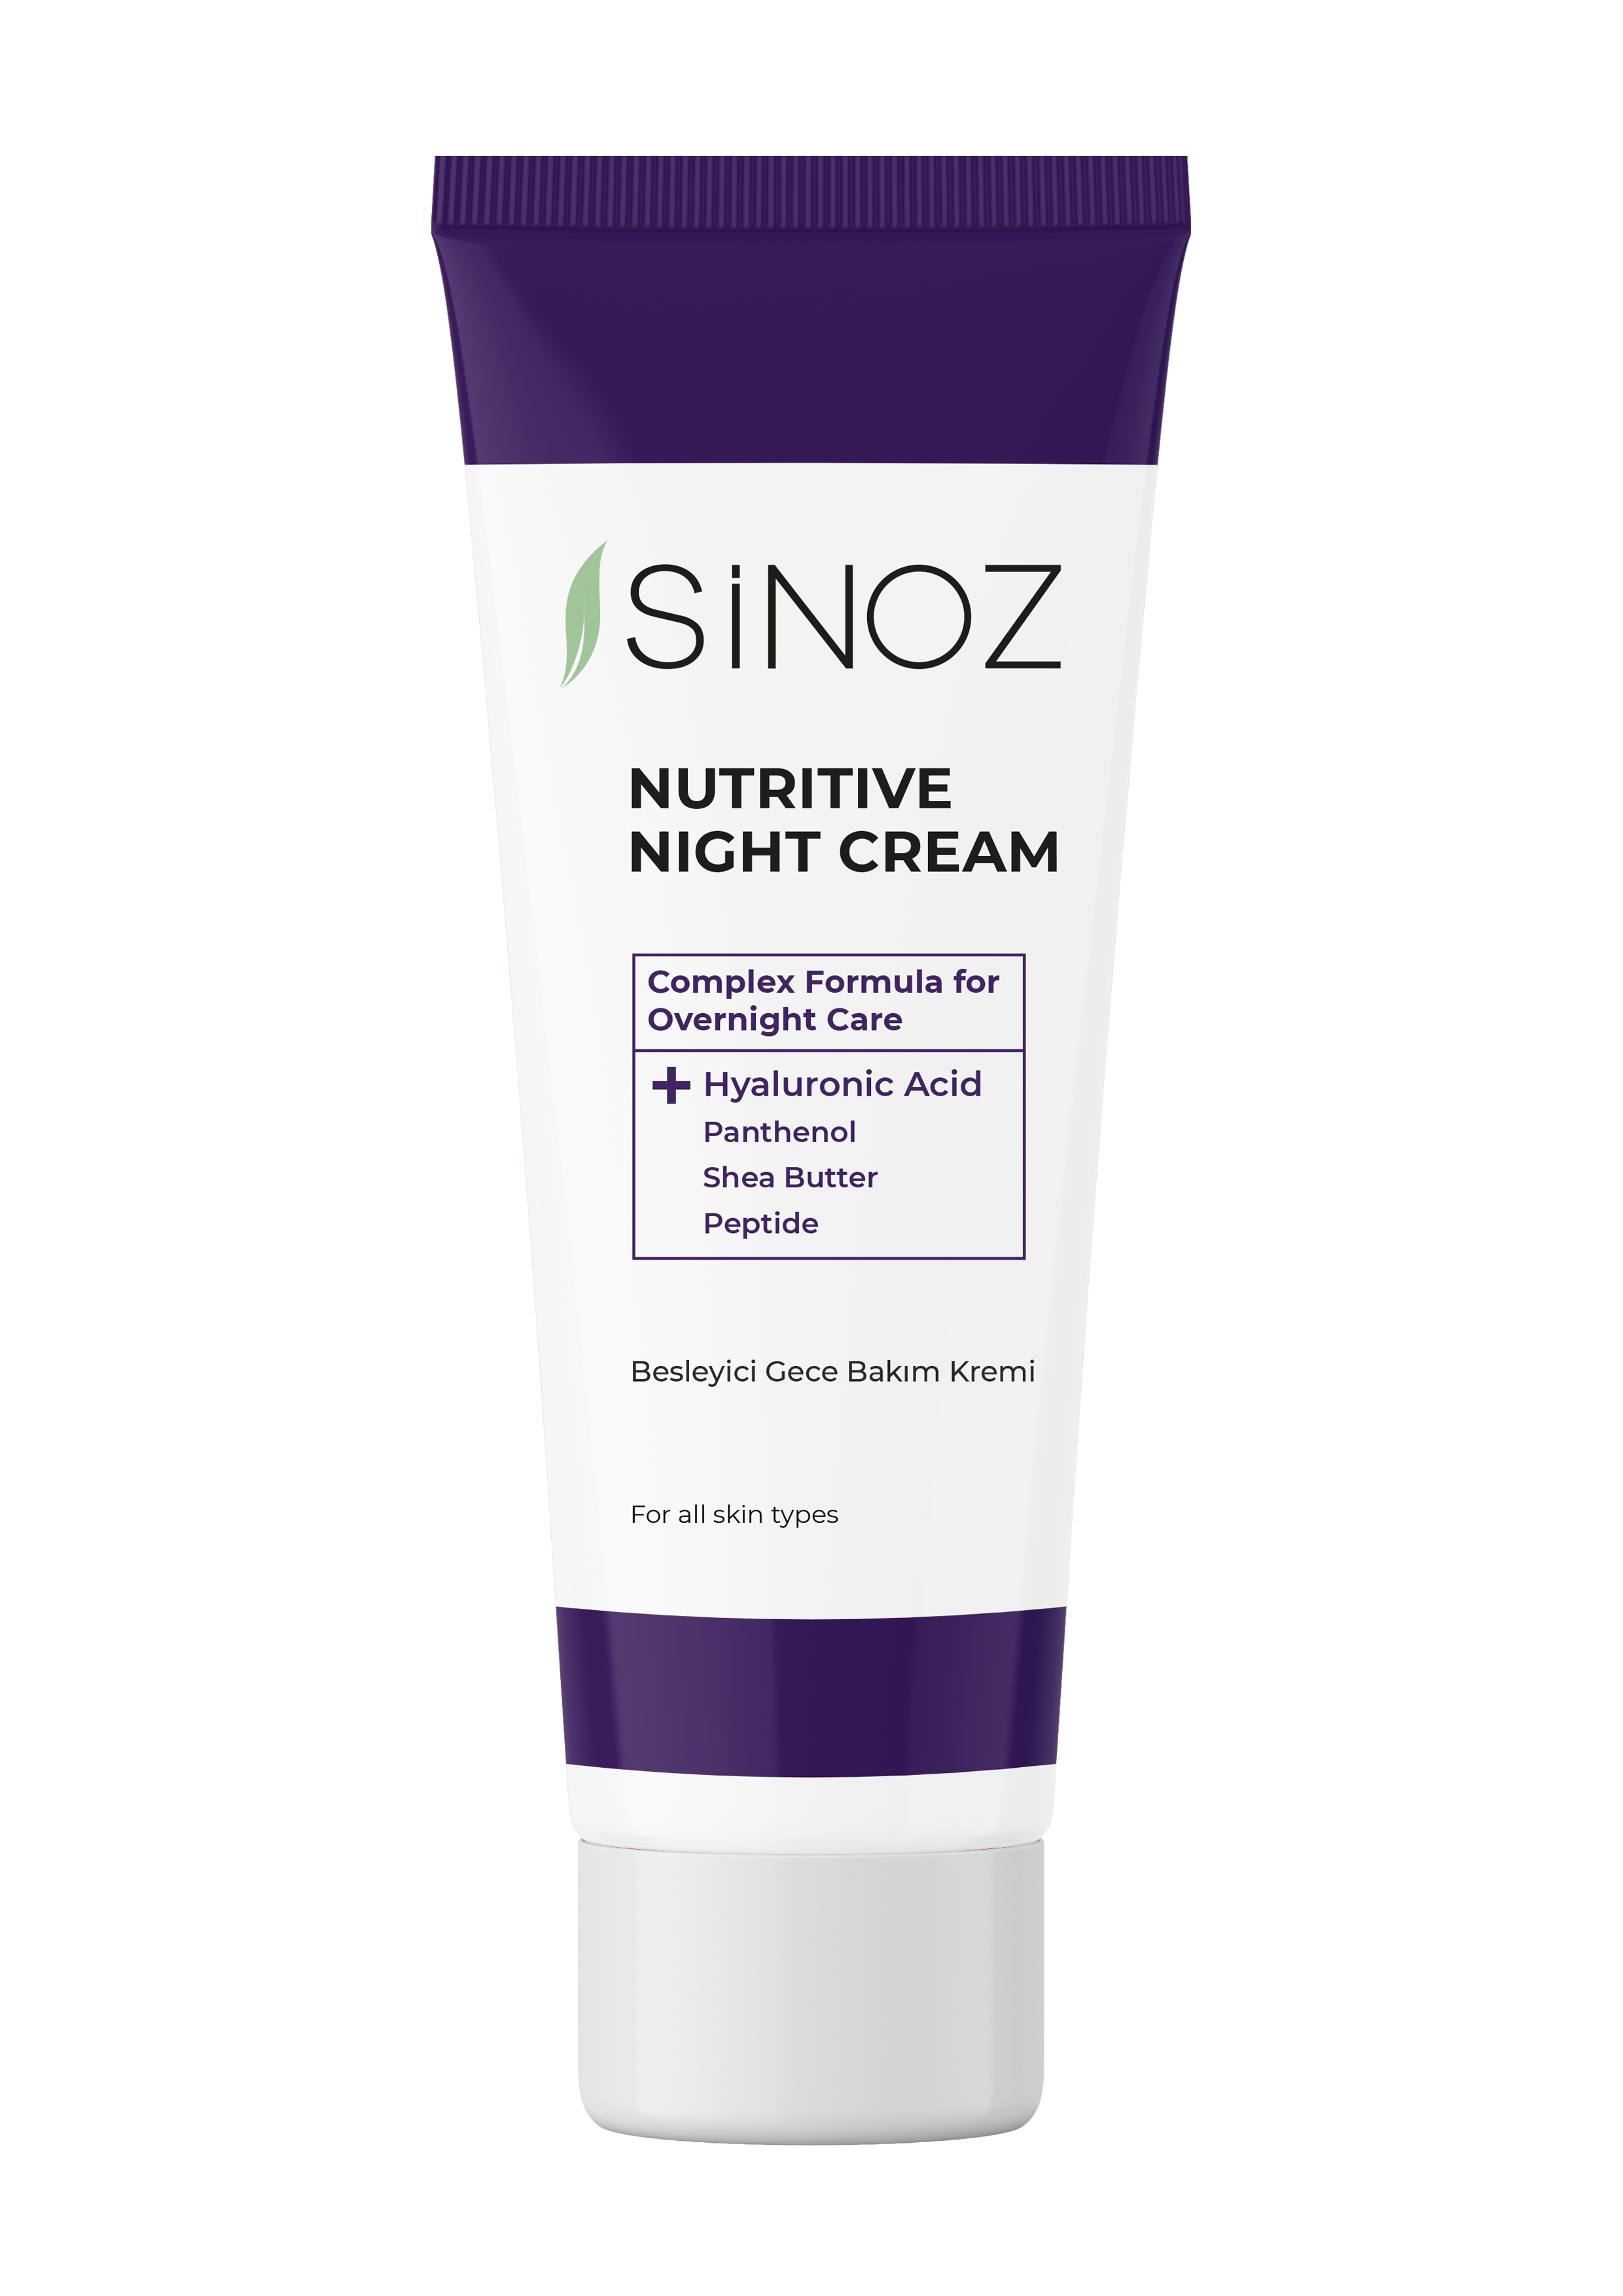 Sinoz Nutritive Night Cream